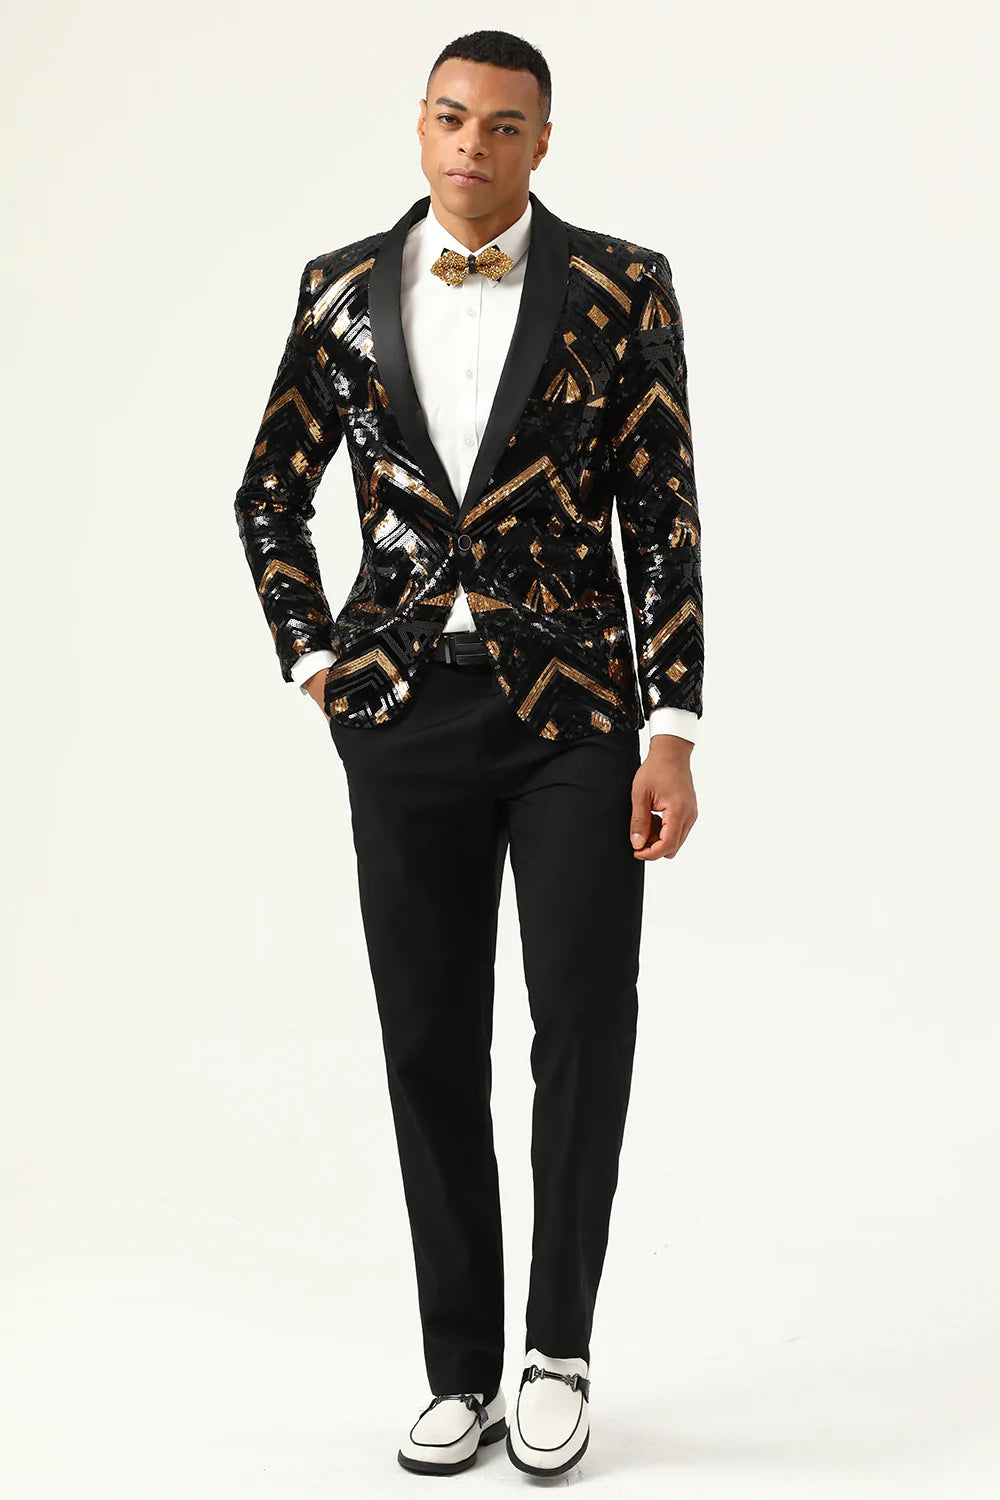 Sparkly Black and Golden Sequins Men's Prom Blazer